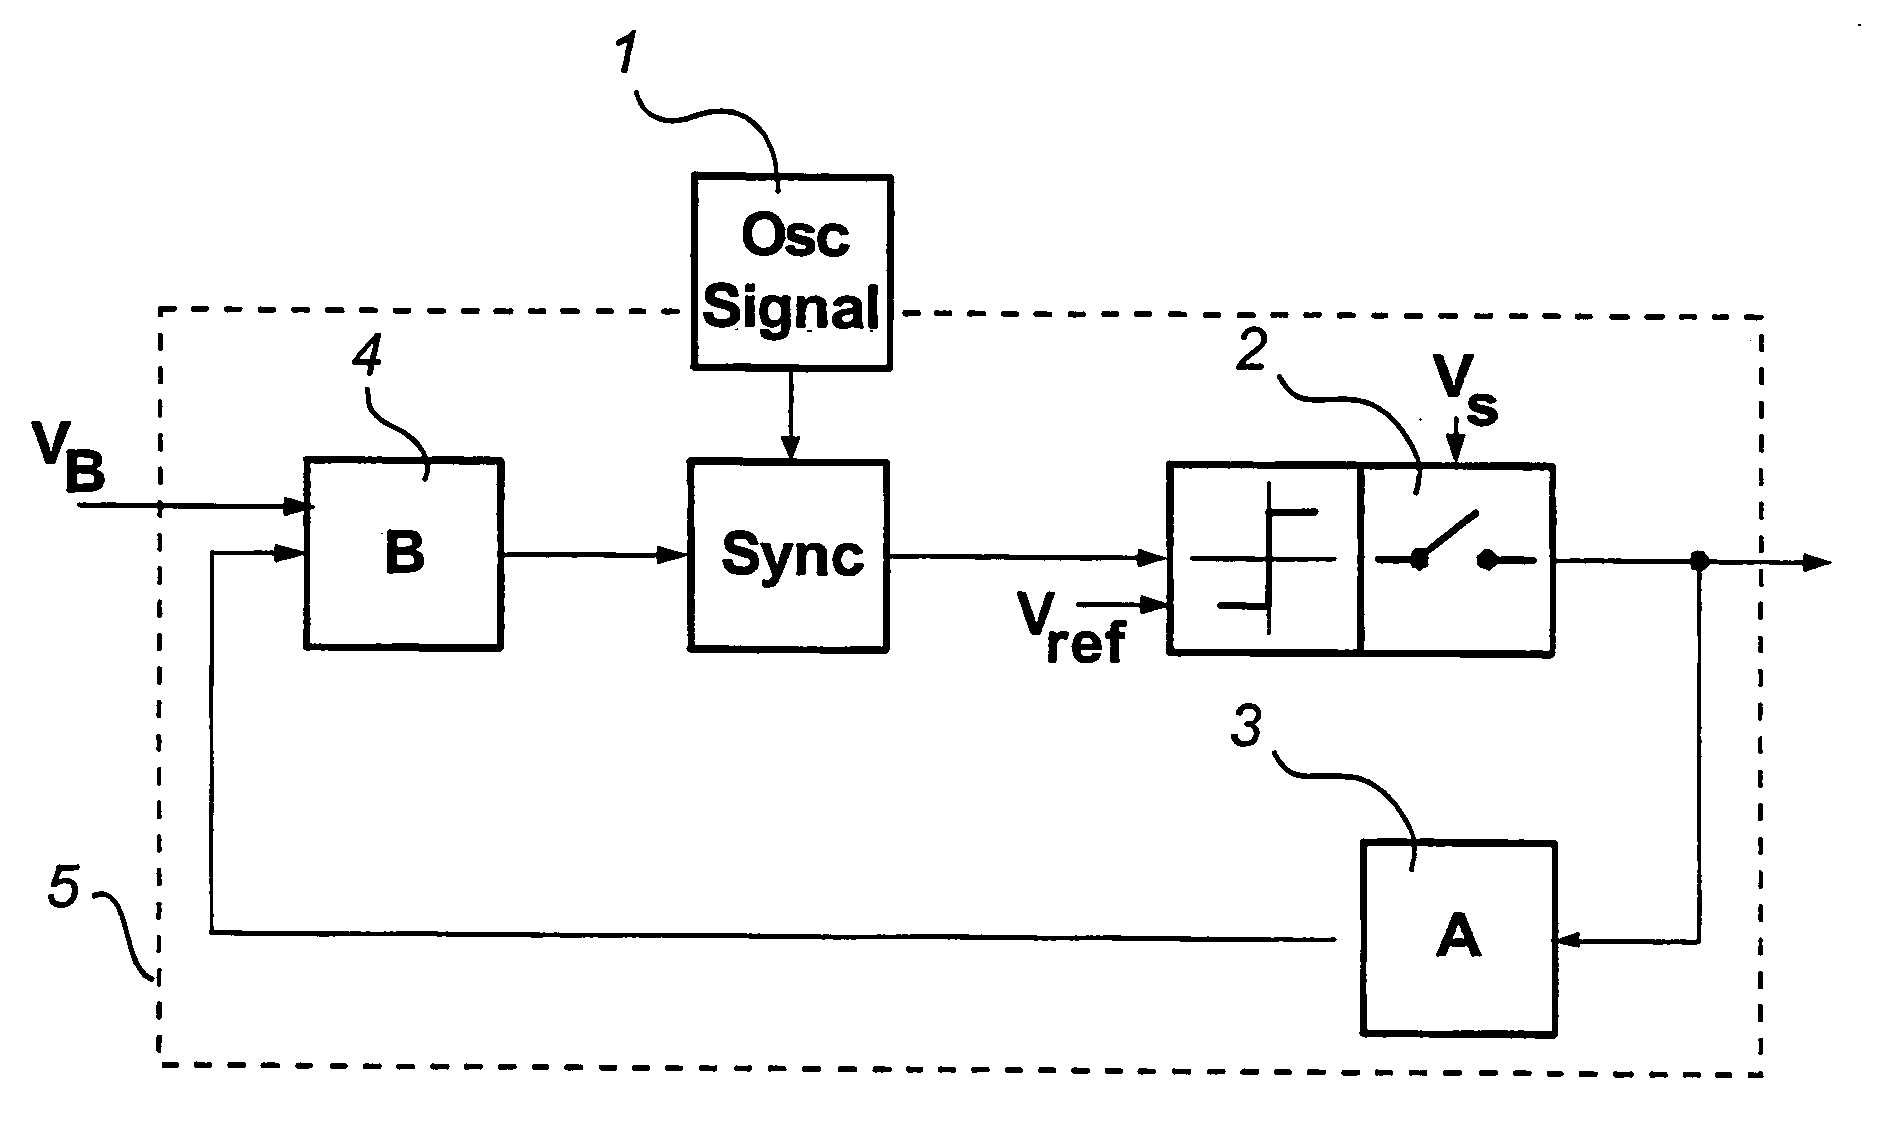 Synchronized controlled oscillation modulator